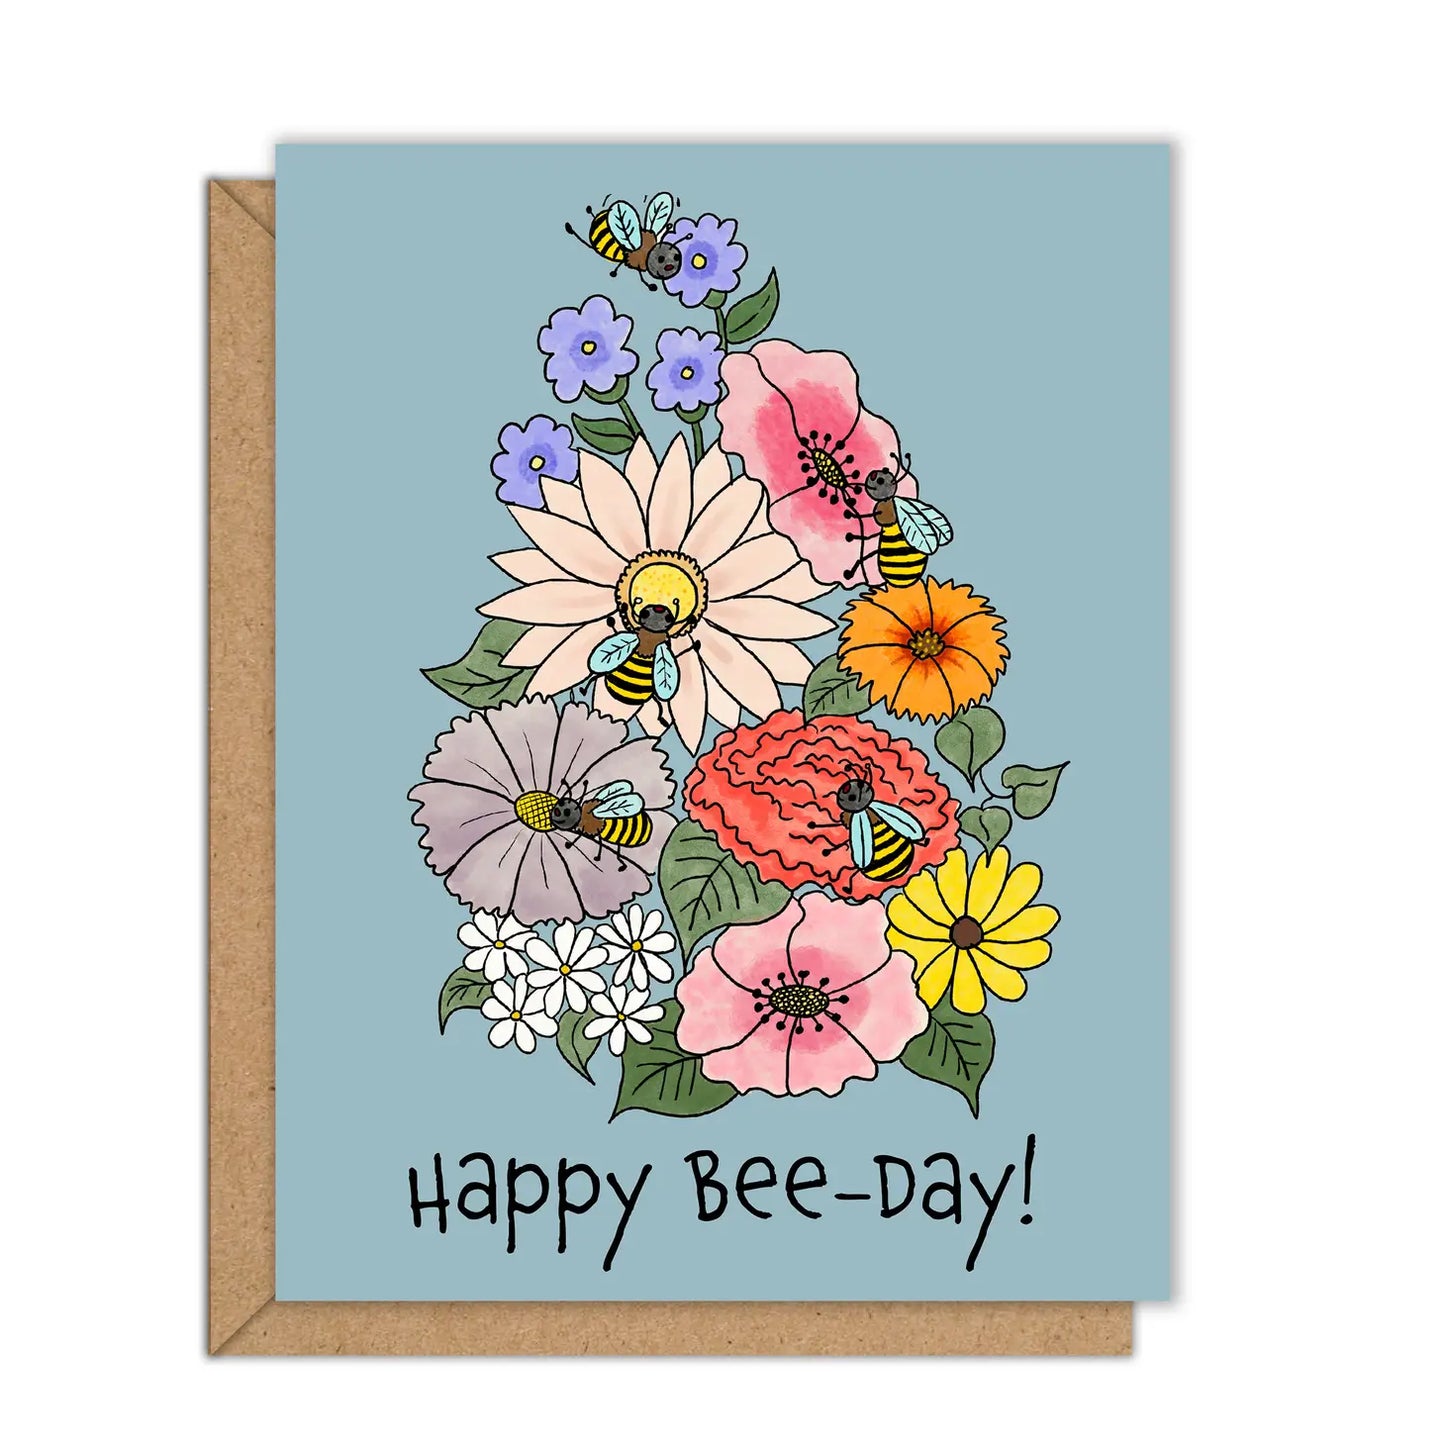 Happy Bee Day! Card - Moon Room Shop and Wellness